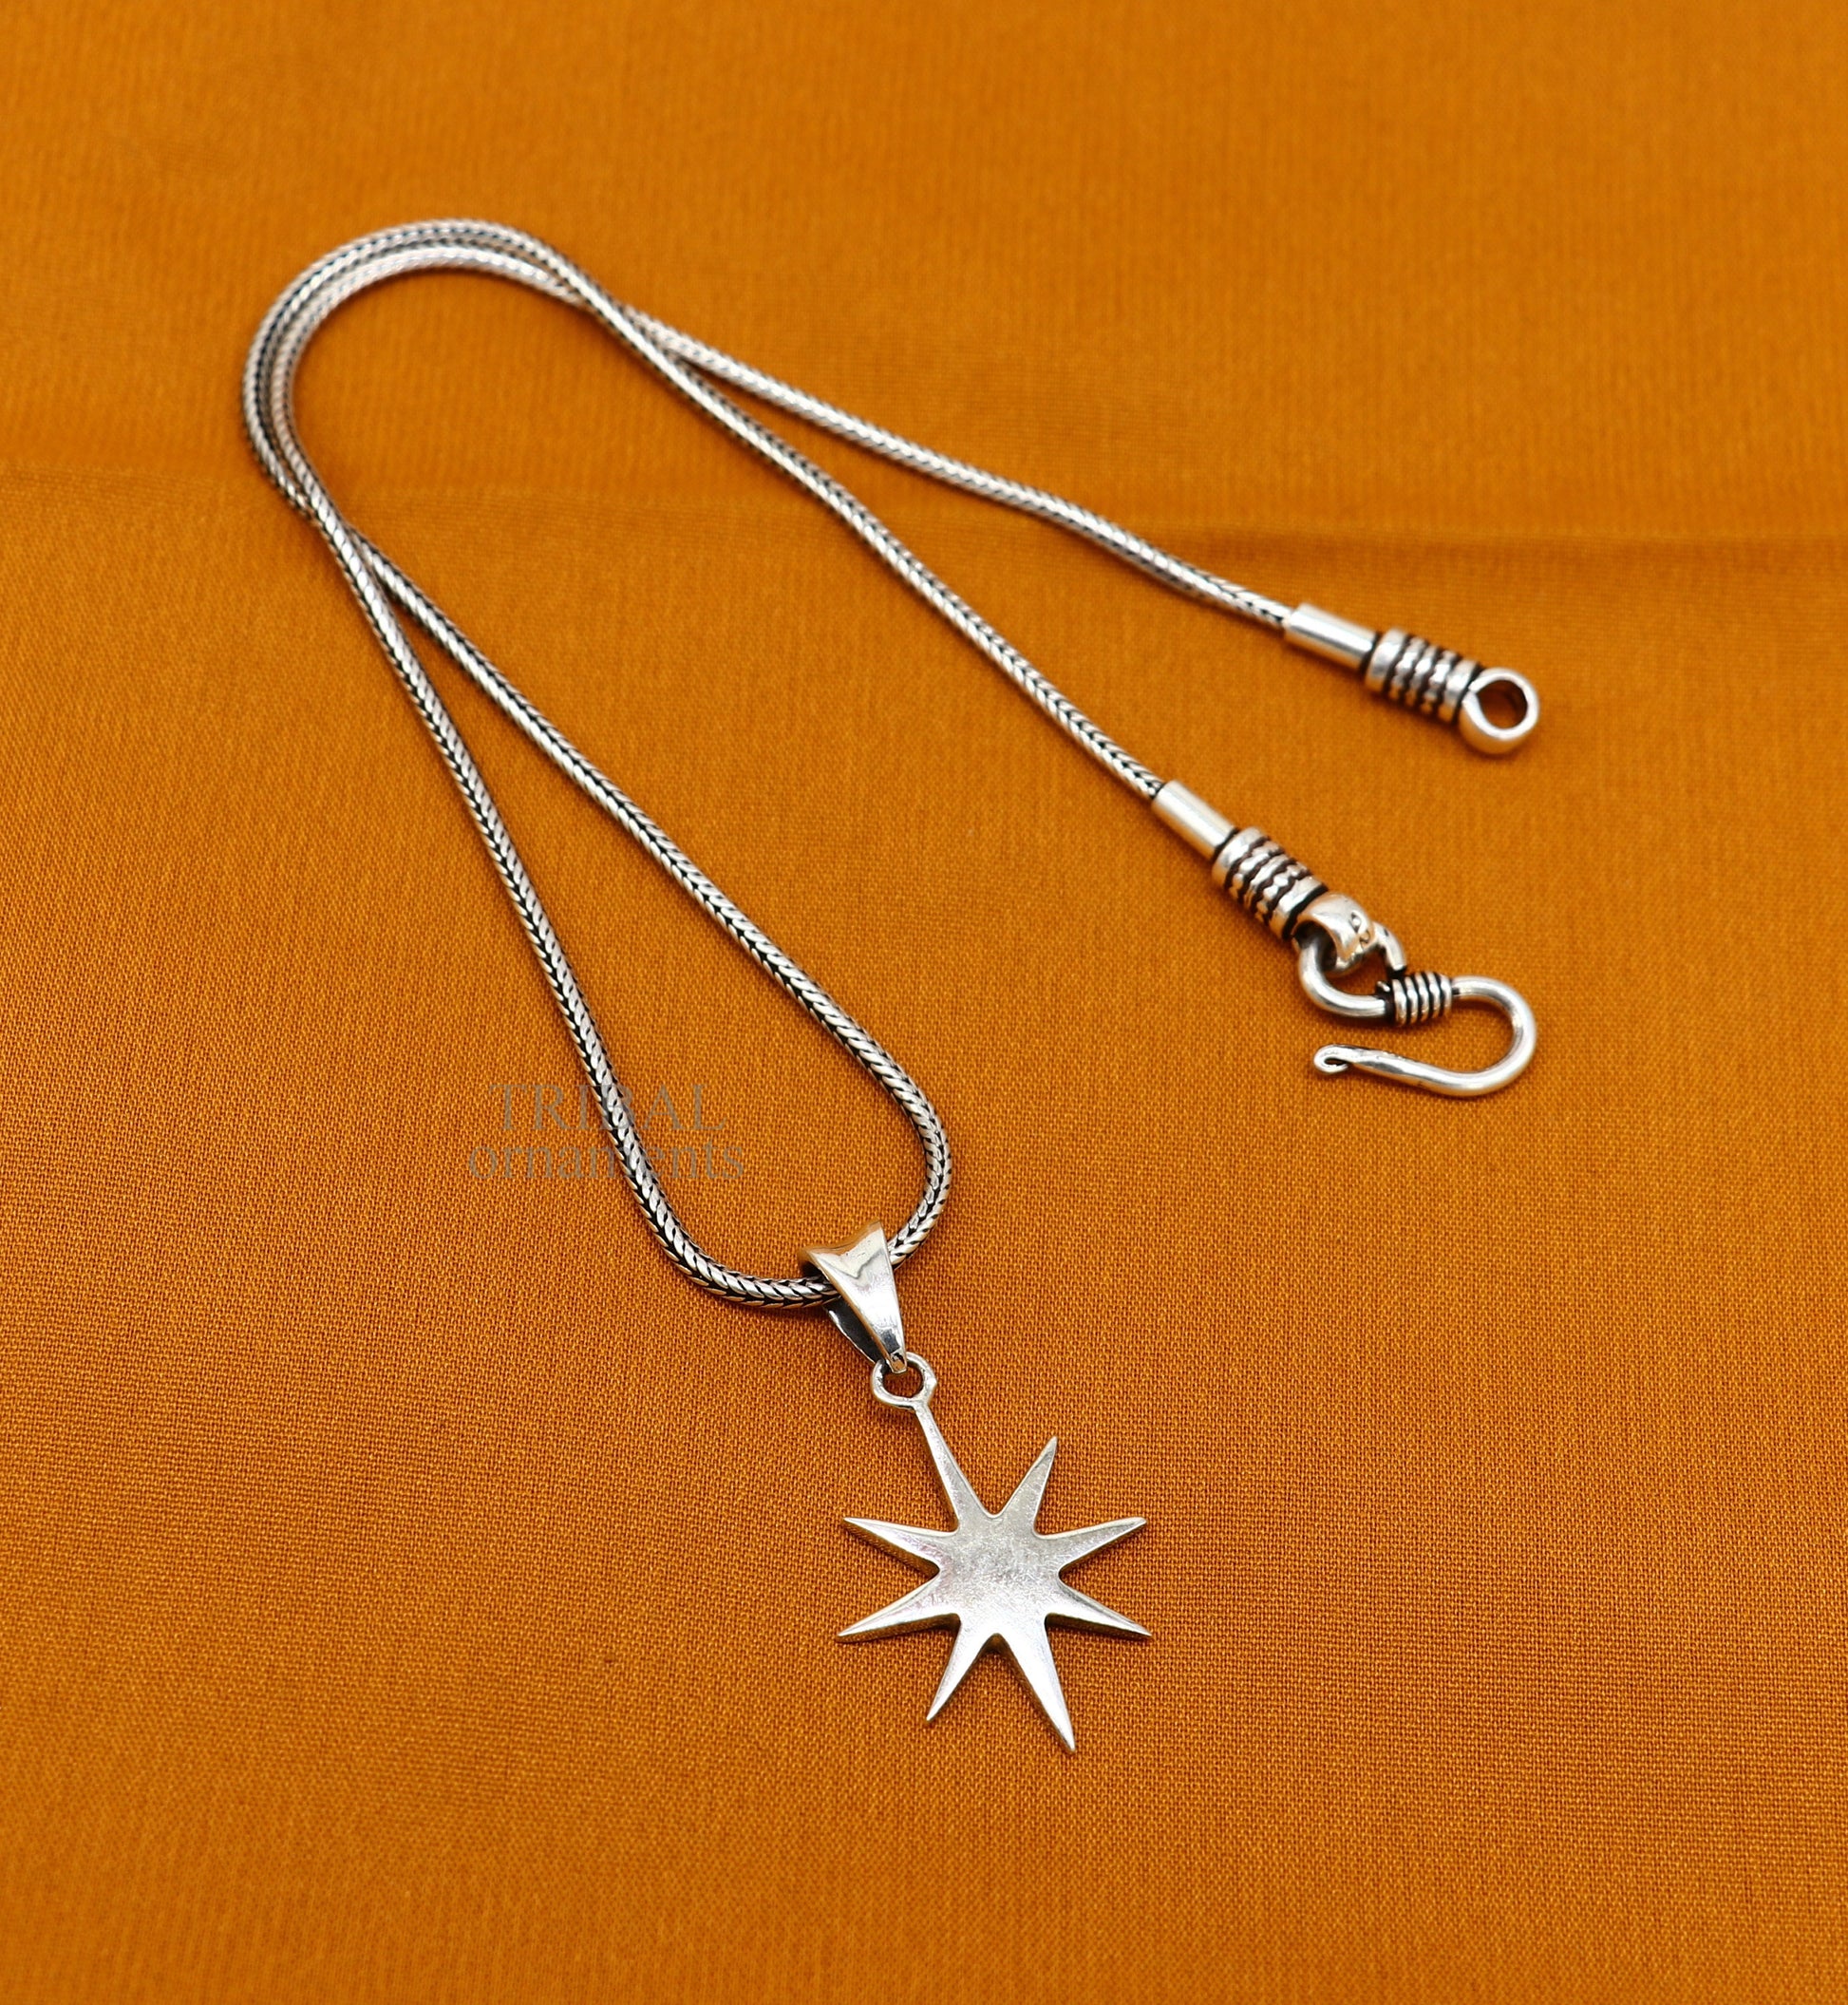 925 sterling silver handmade star pendant, best gifting unisex pendant locket, plain silver pendant elegant pendant jewelry ssp1670 - TRIBAL ORNAMENTS